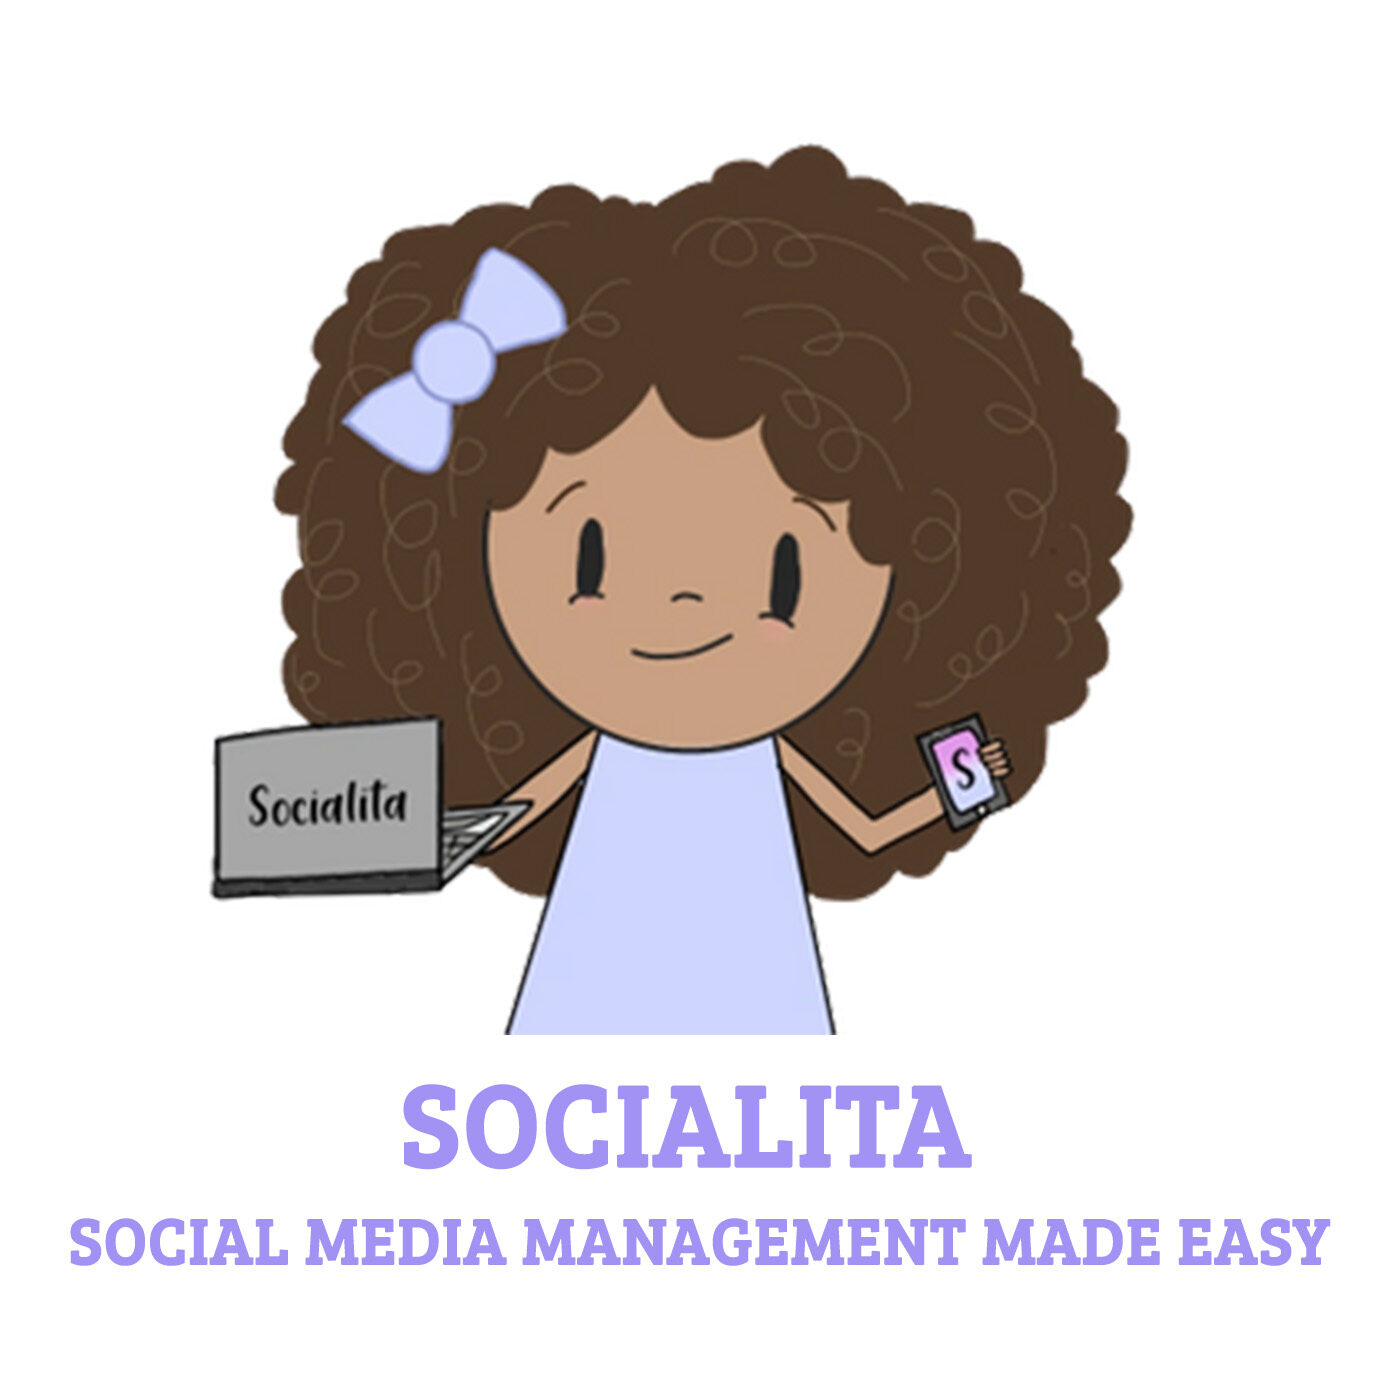 SOCIALITA - SOCIAL MEDIA MANAGEMENT MADE EASY